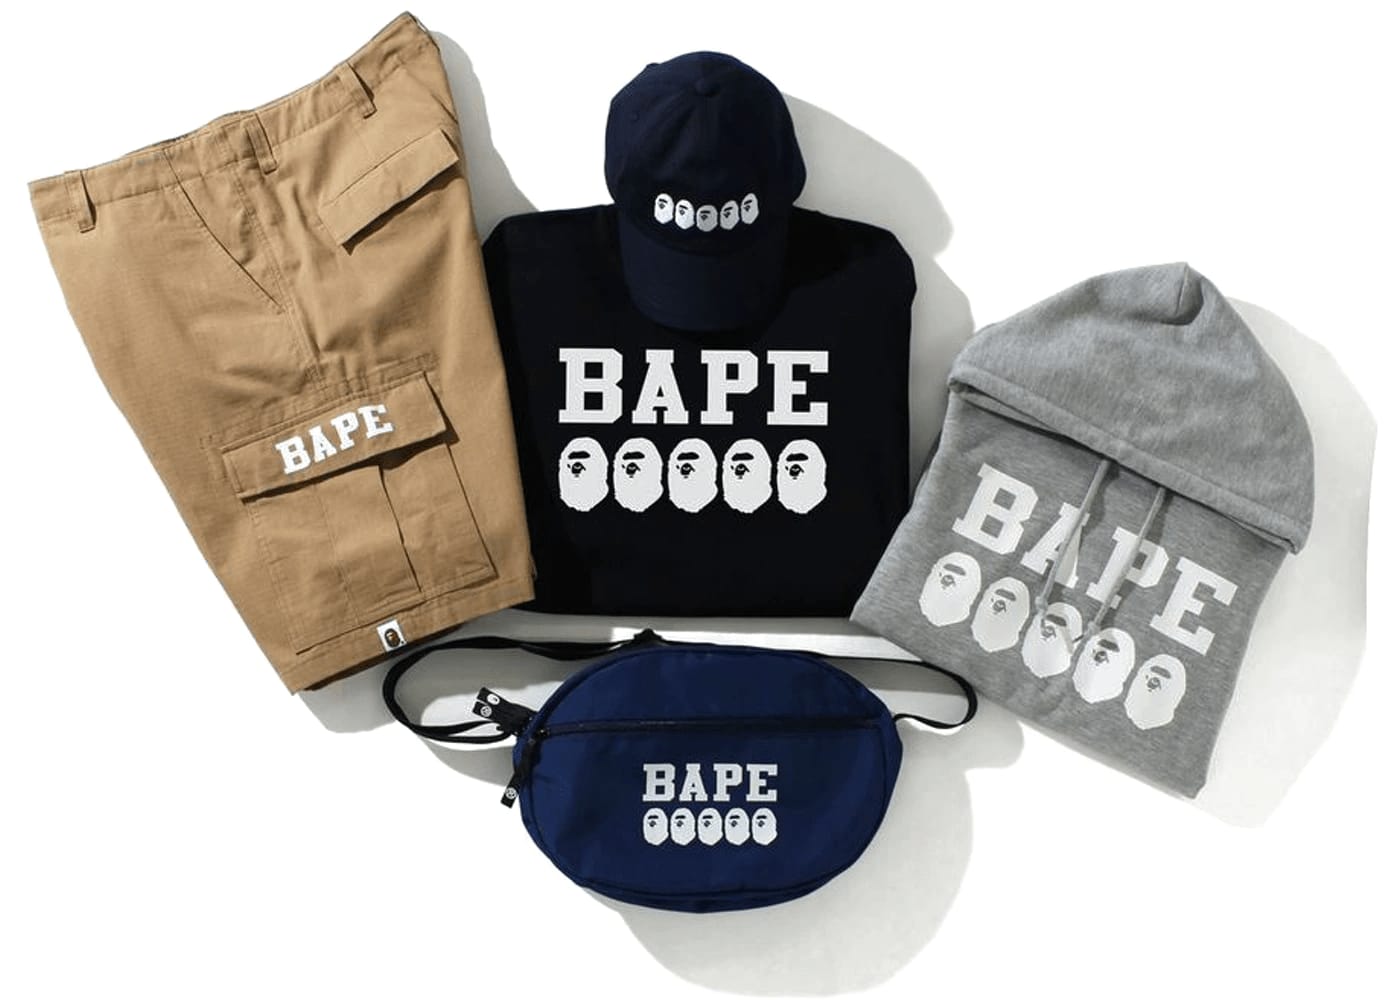 Bape Store Bag